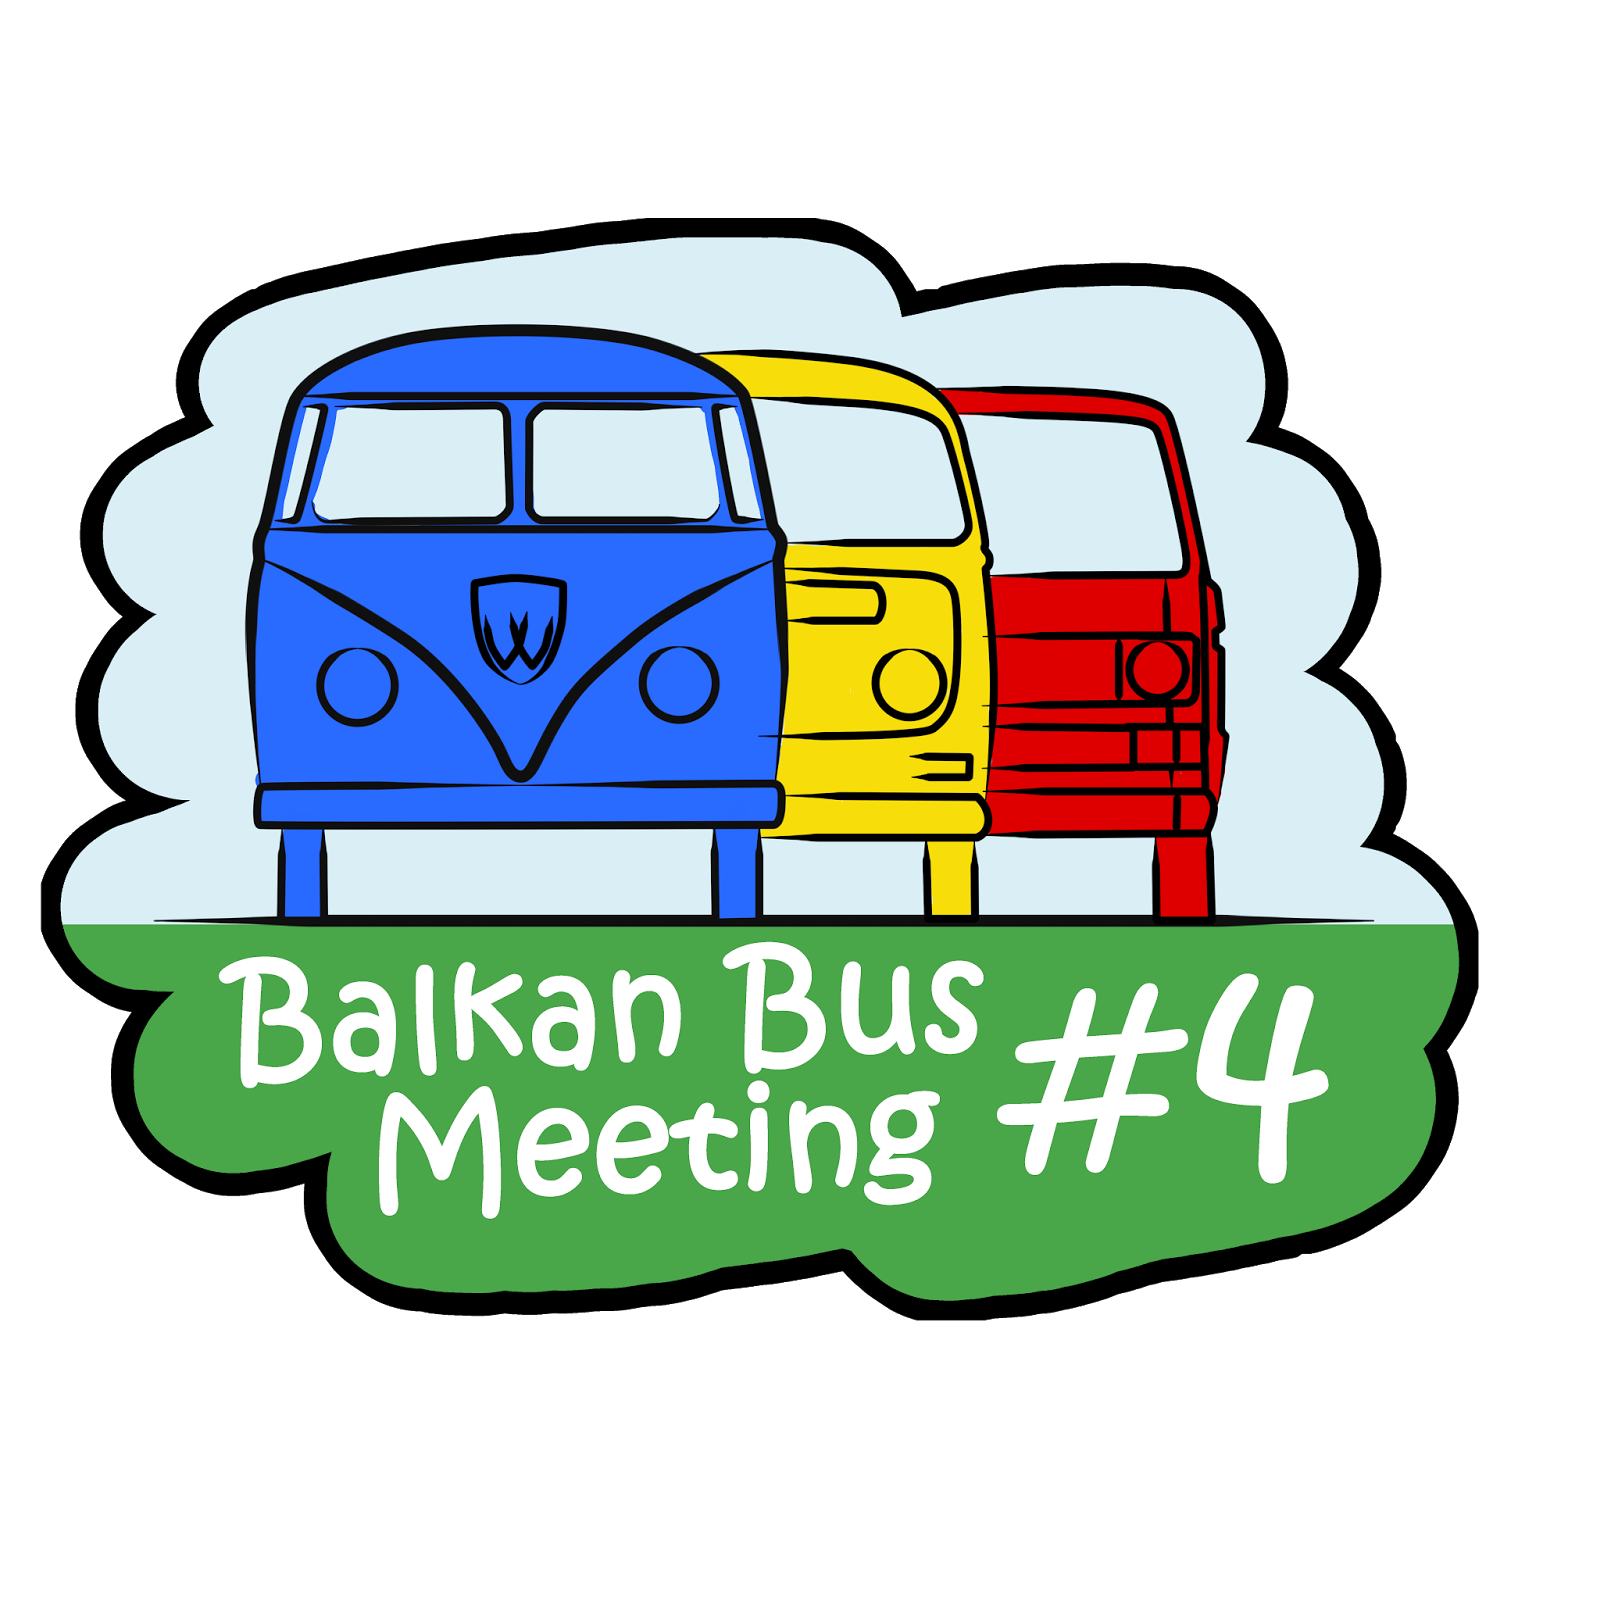 http://www.balkanbusmeeting.com/